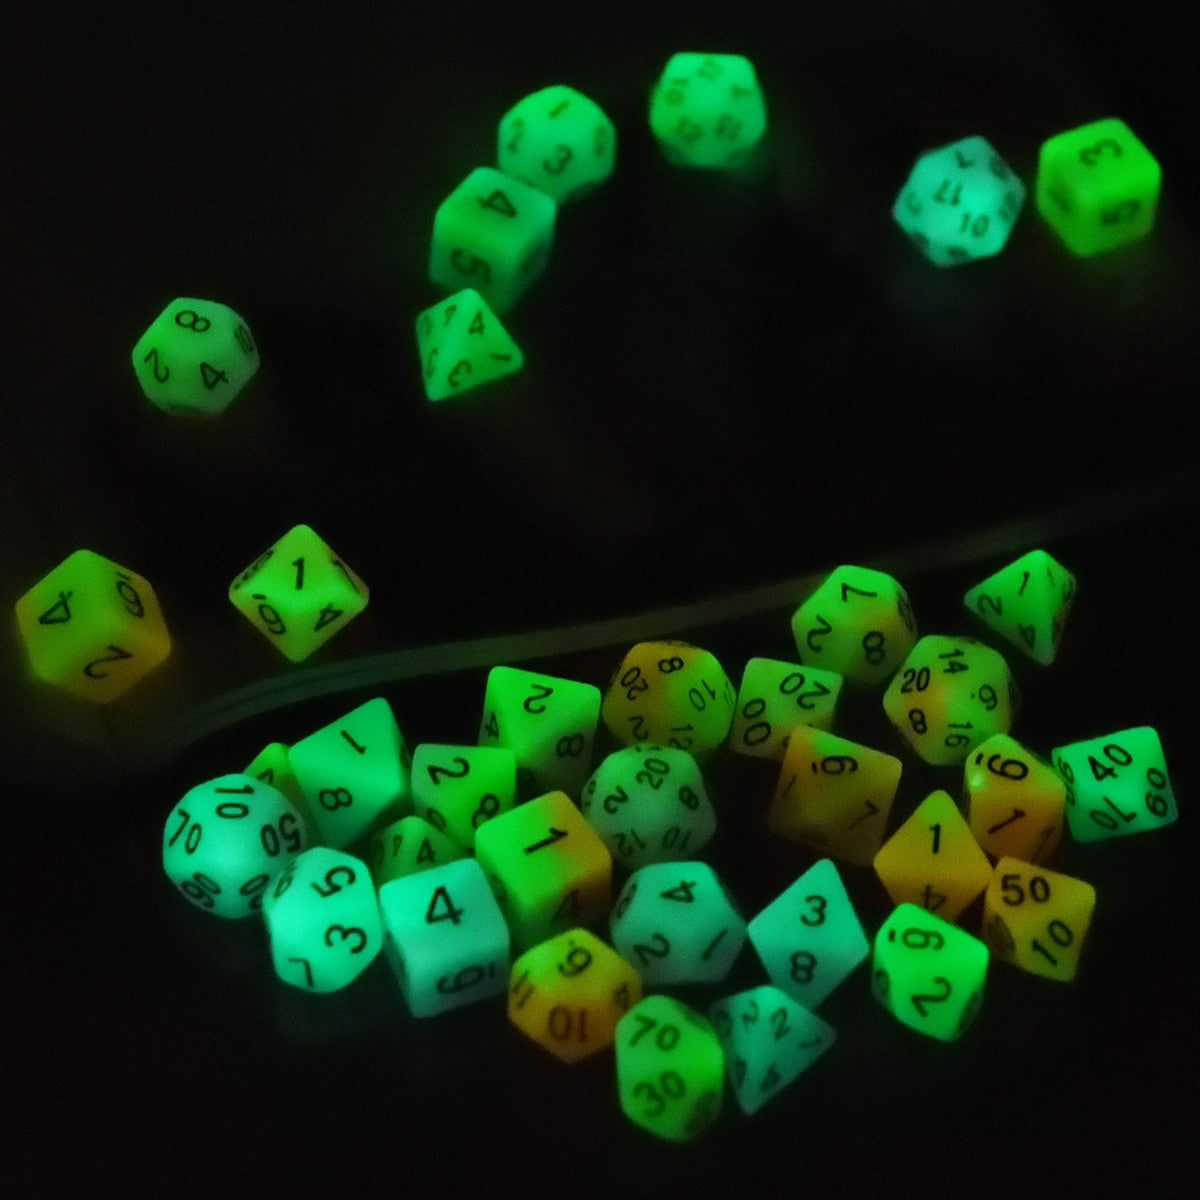 The Glowy sets